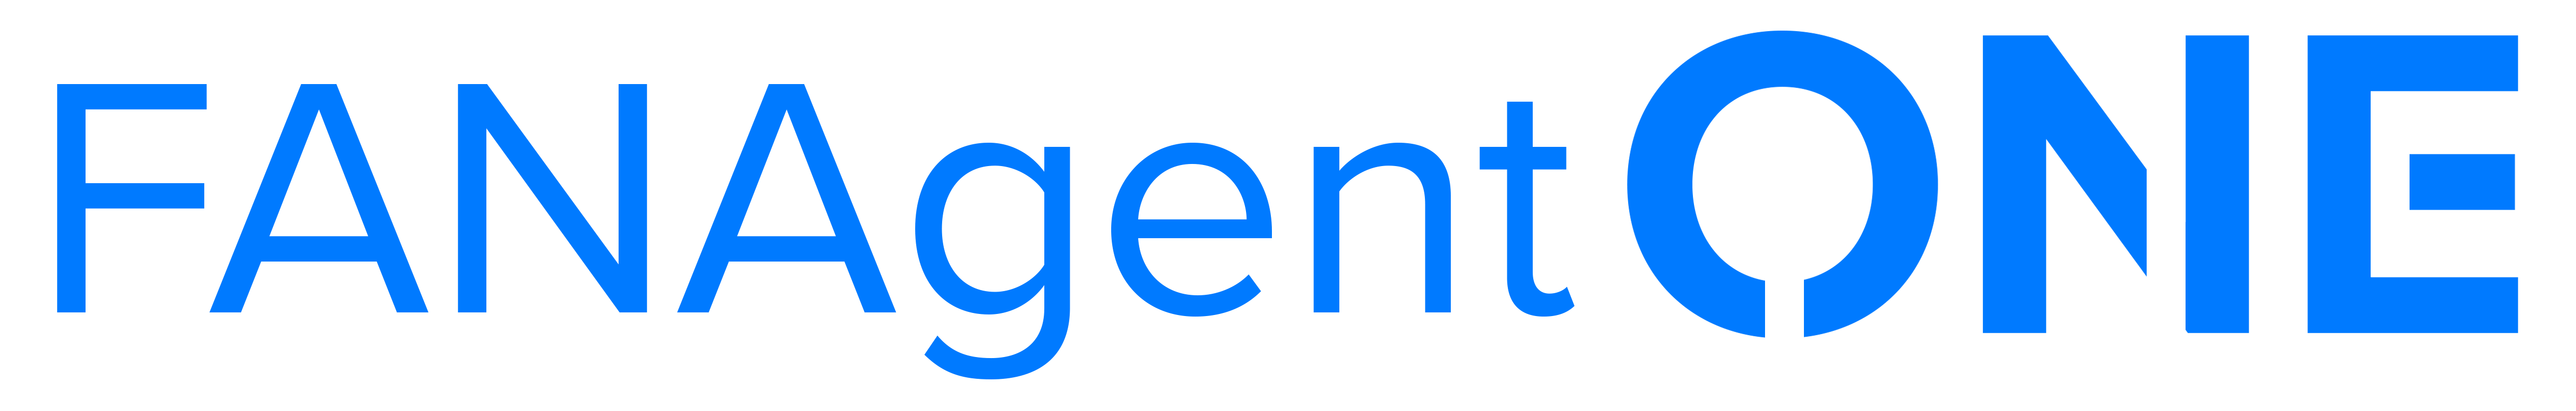 FANAgent ONE Logo